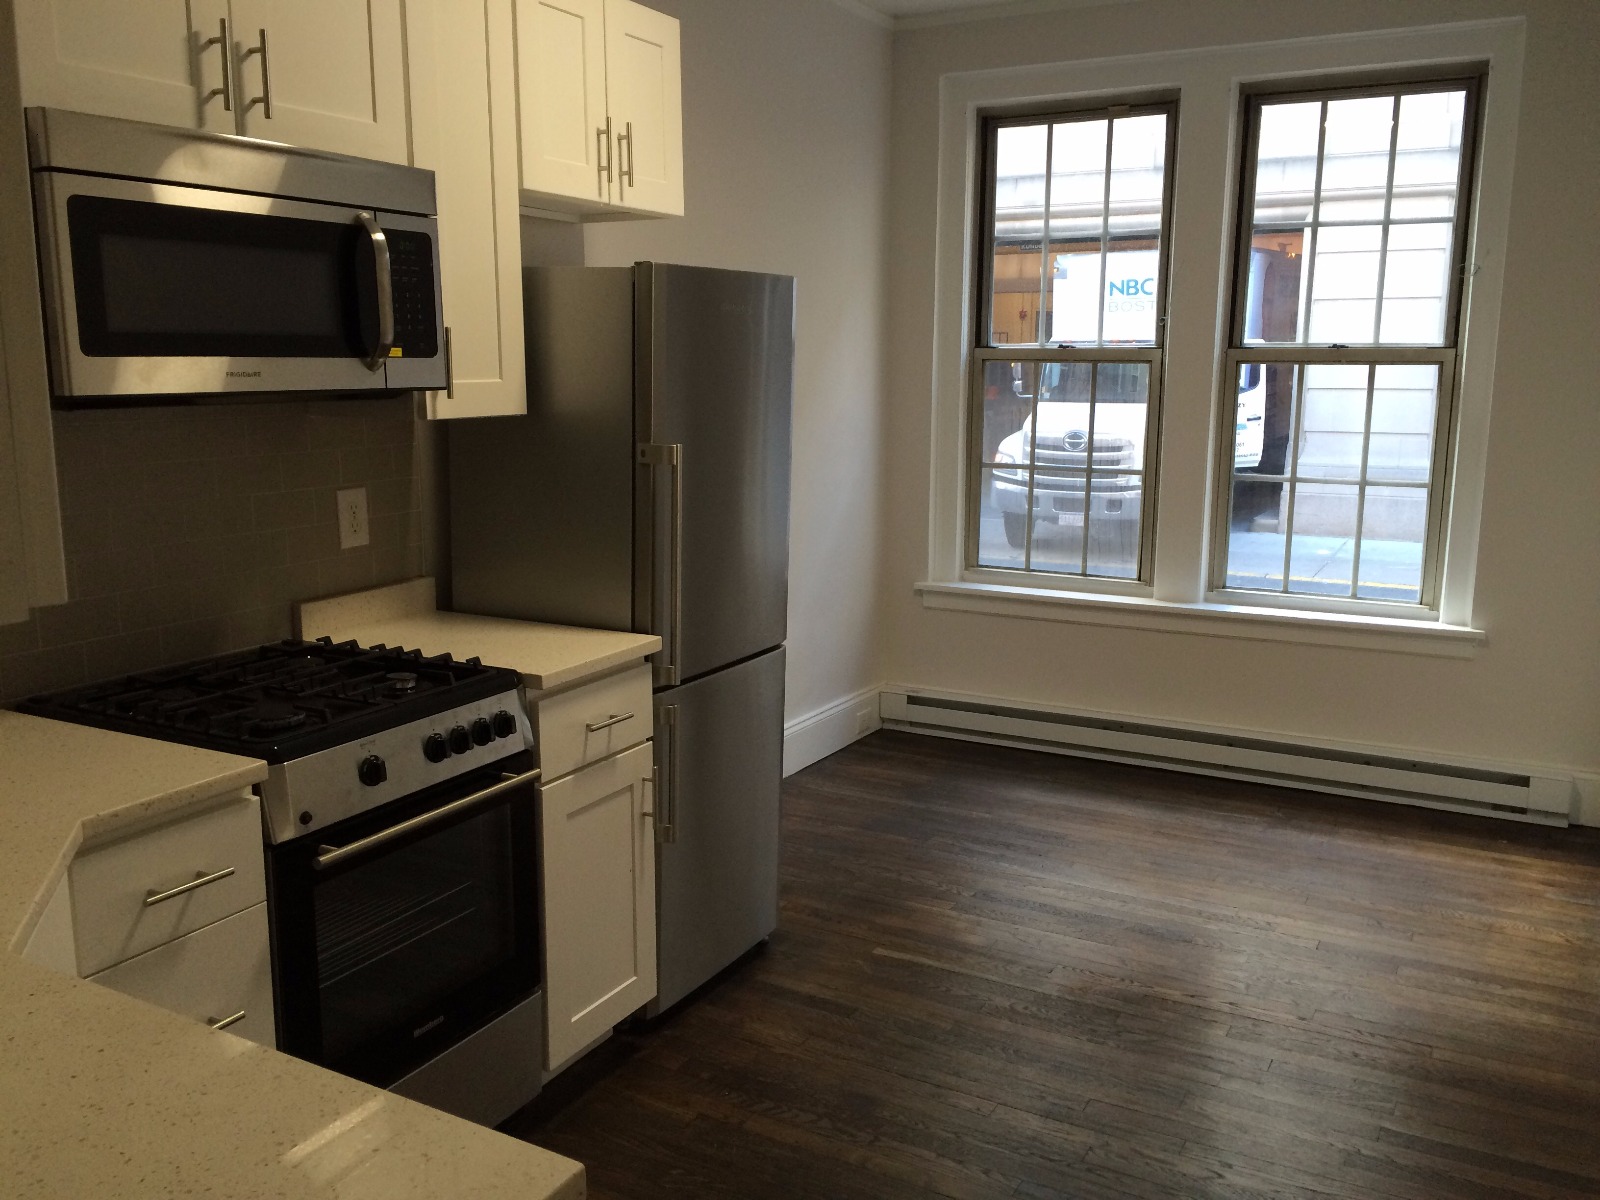 Photos of apartment on Newbury St.,Boston MA 02115